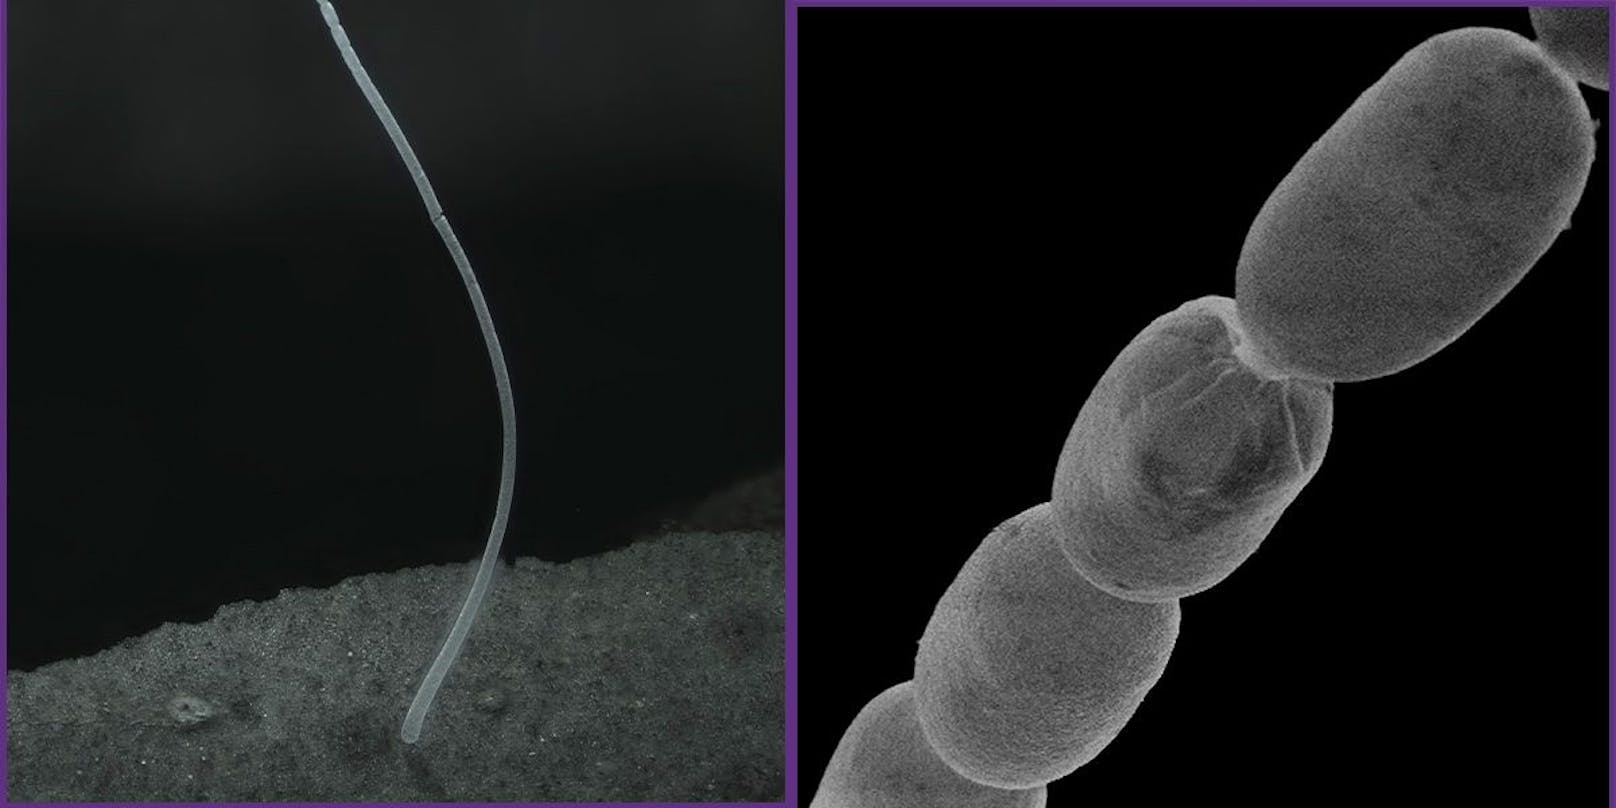 Mit Auge sichtbar: Größtes Bakterium der Welt entdeckt